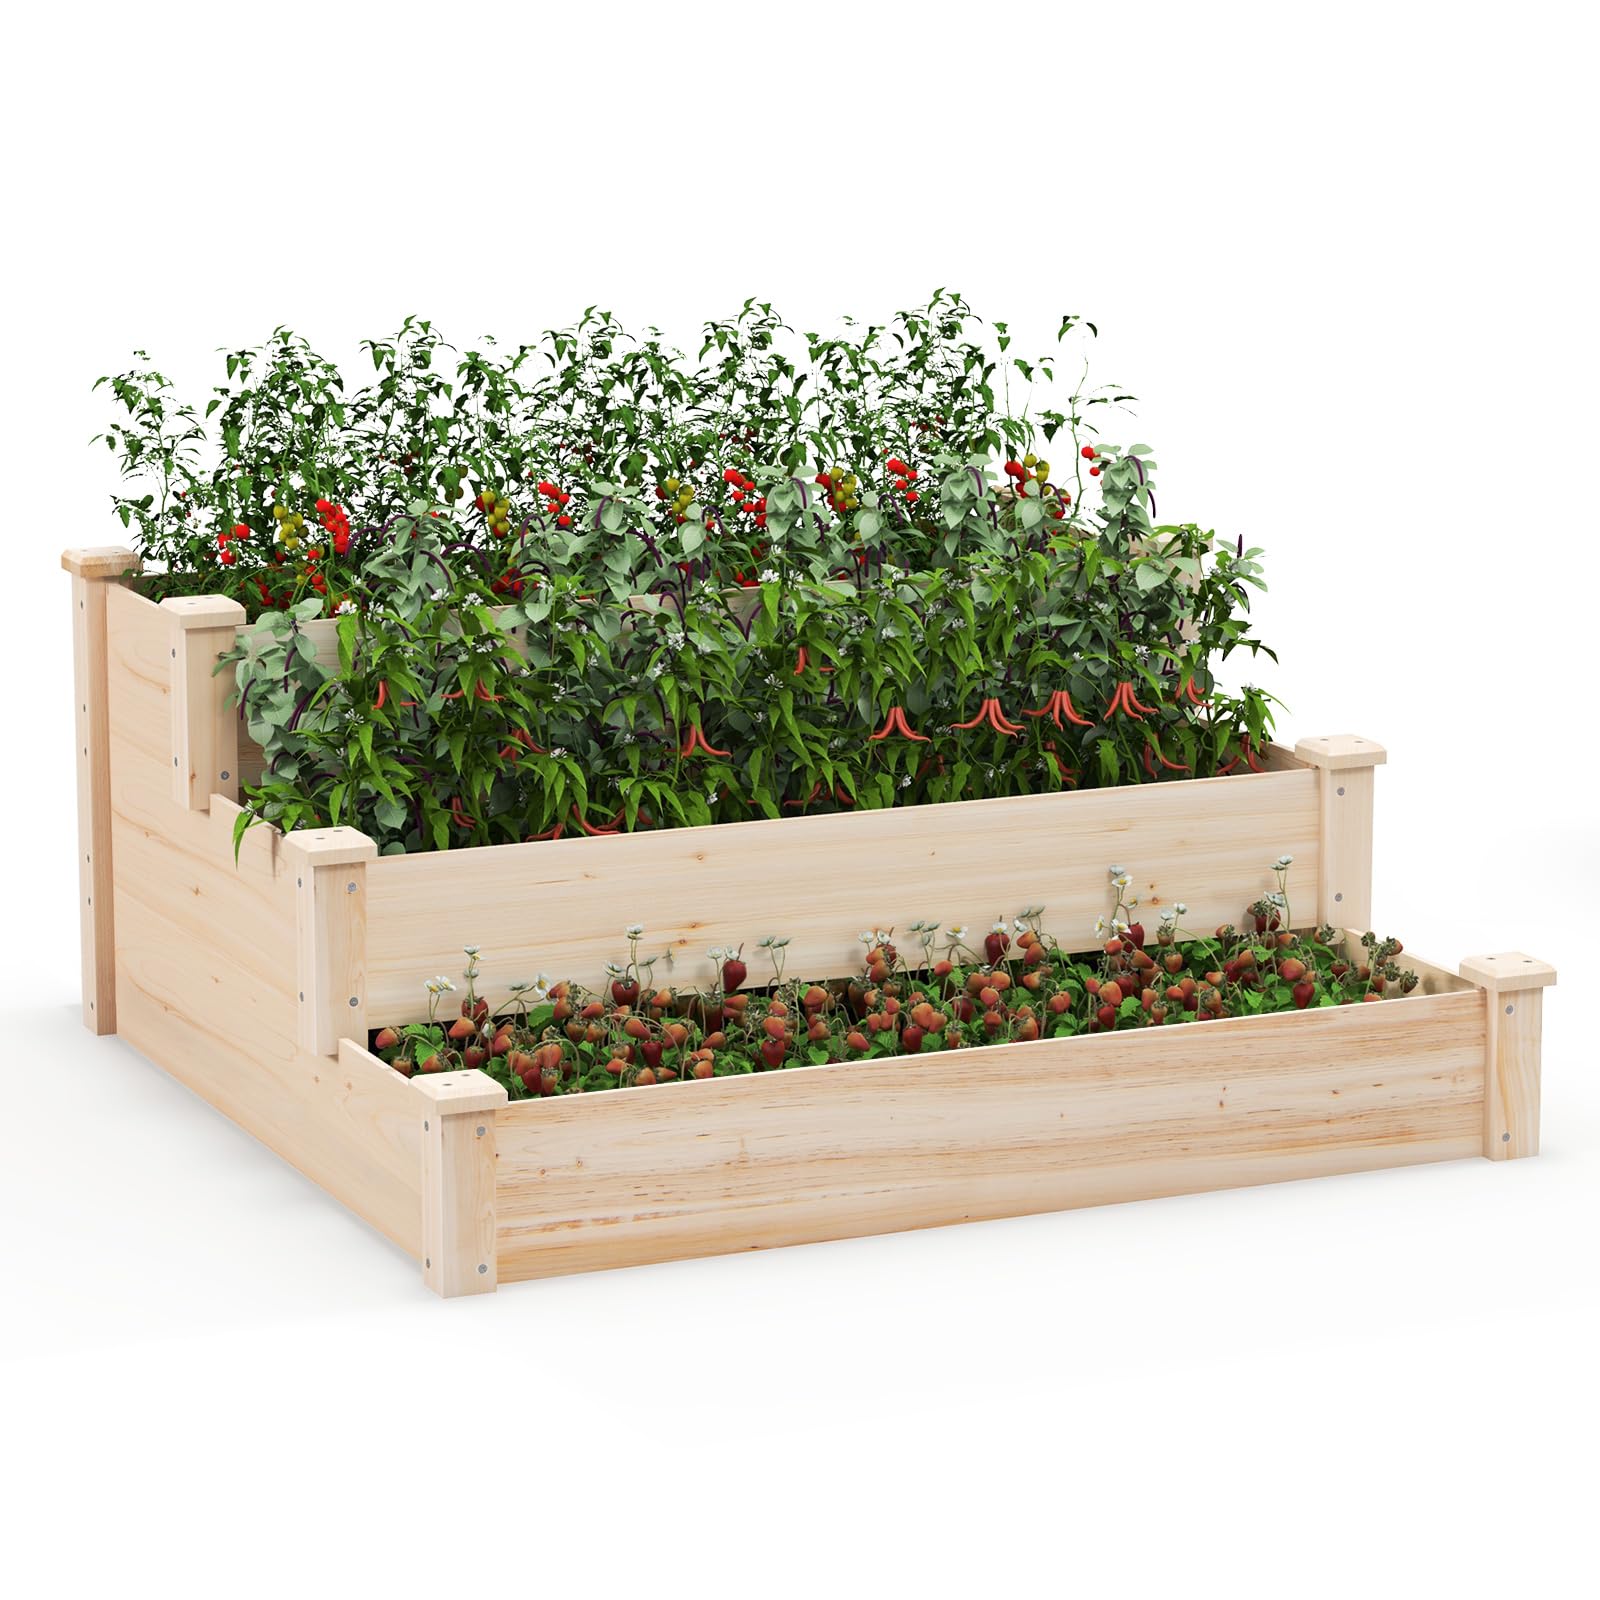 Giantex 3-Tier Raised Garden Bed, Tiered Planter Box